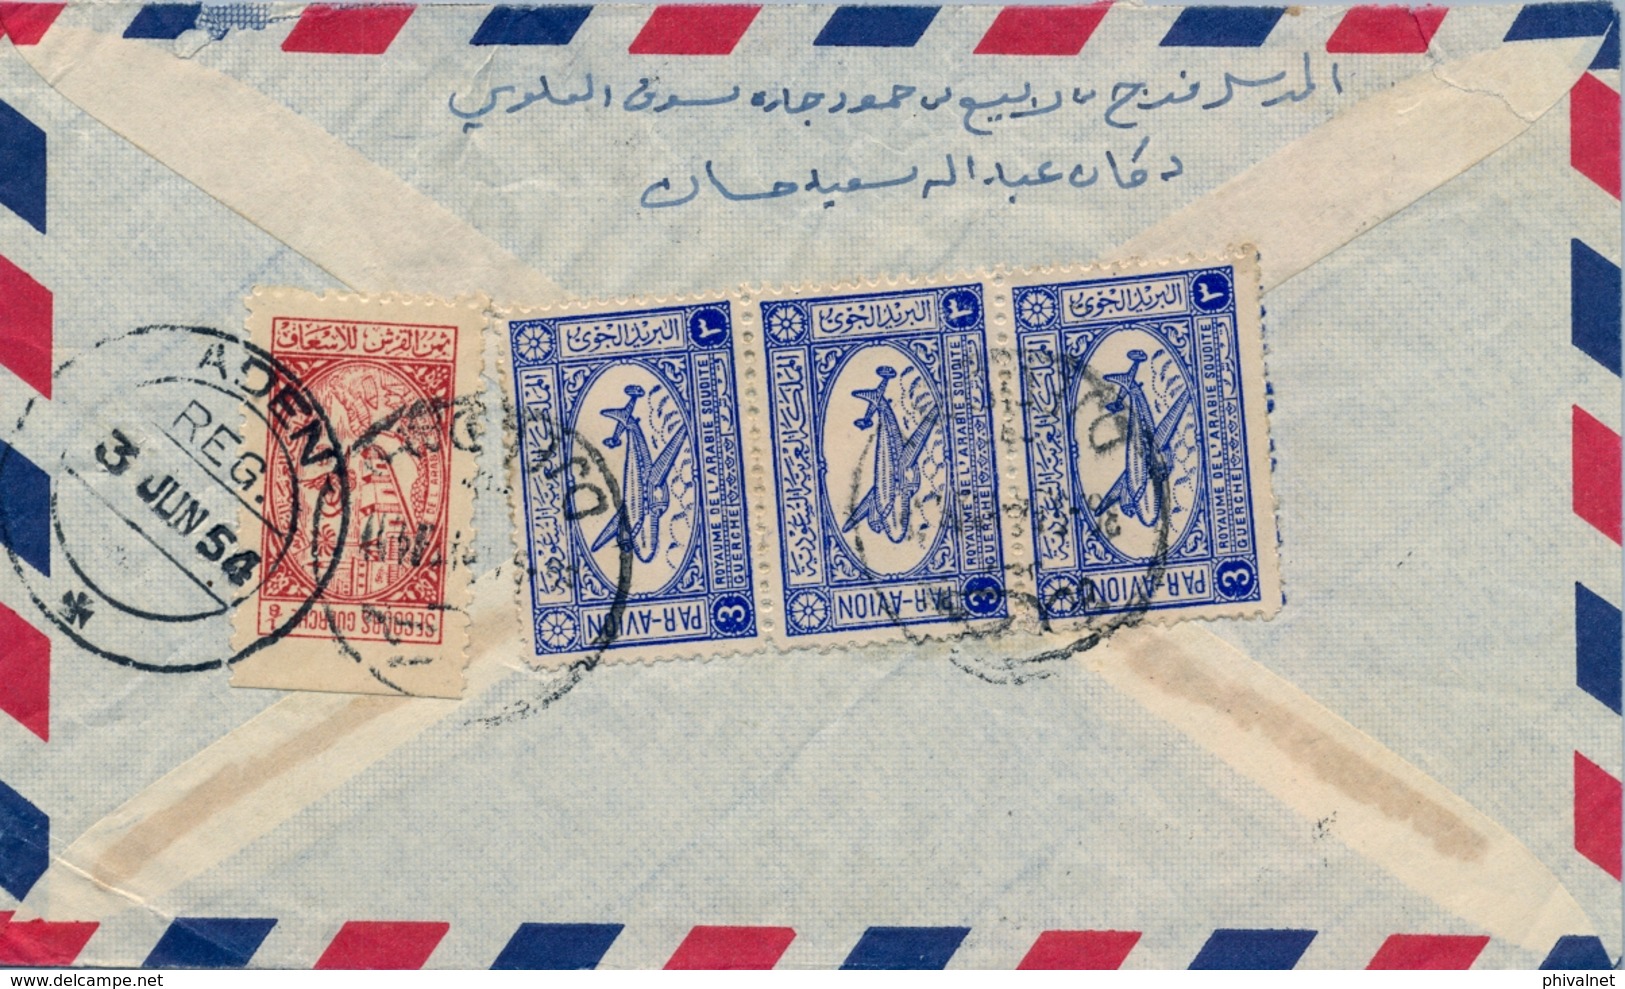 1954 , ARABIA SAUDITA , SOBRE CIRCULADO , JEDDAH - ADEN , LLEGADA AL DORSO - Arabia Saudita